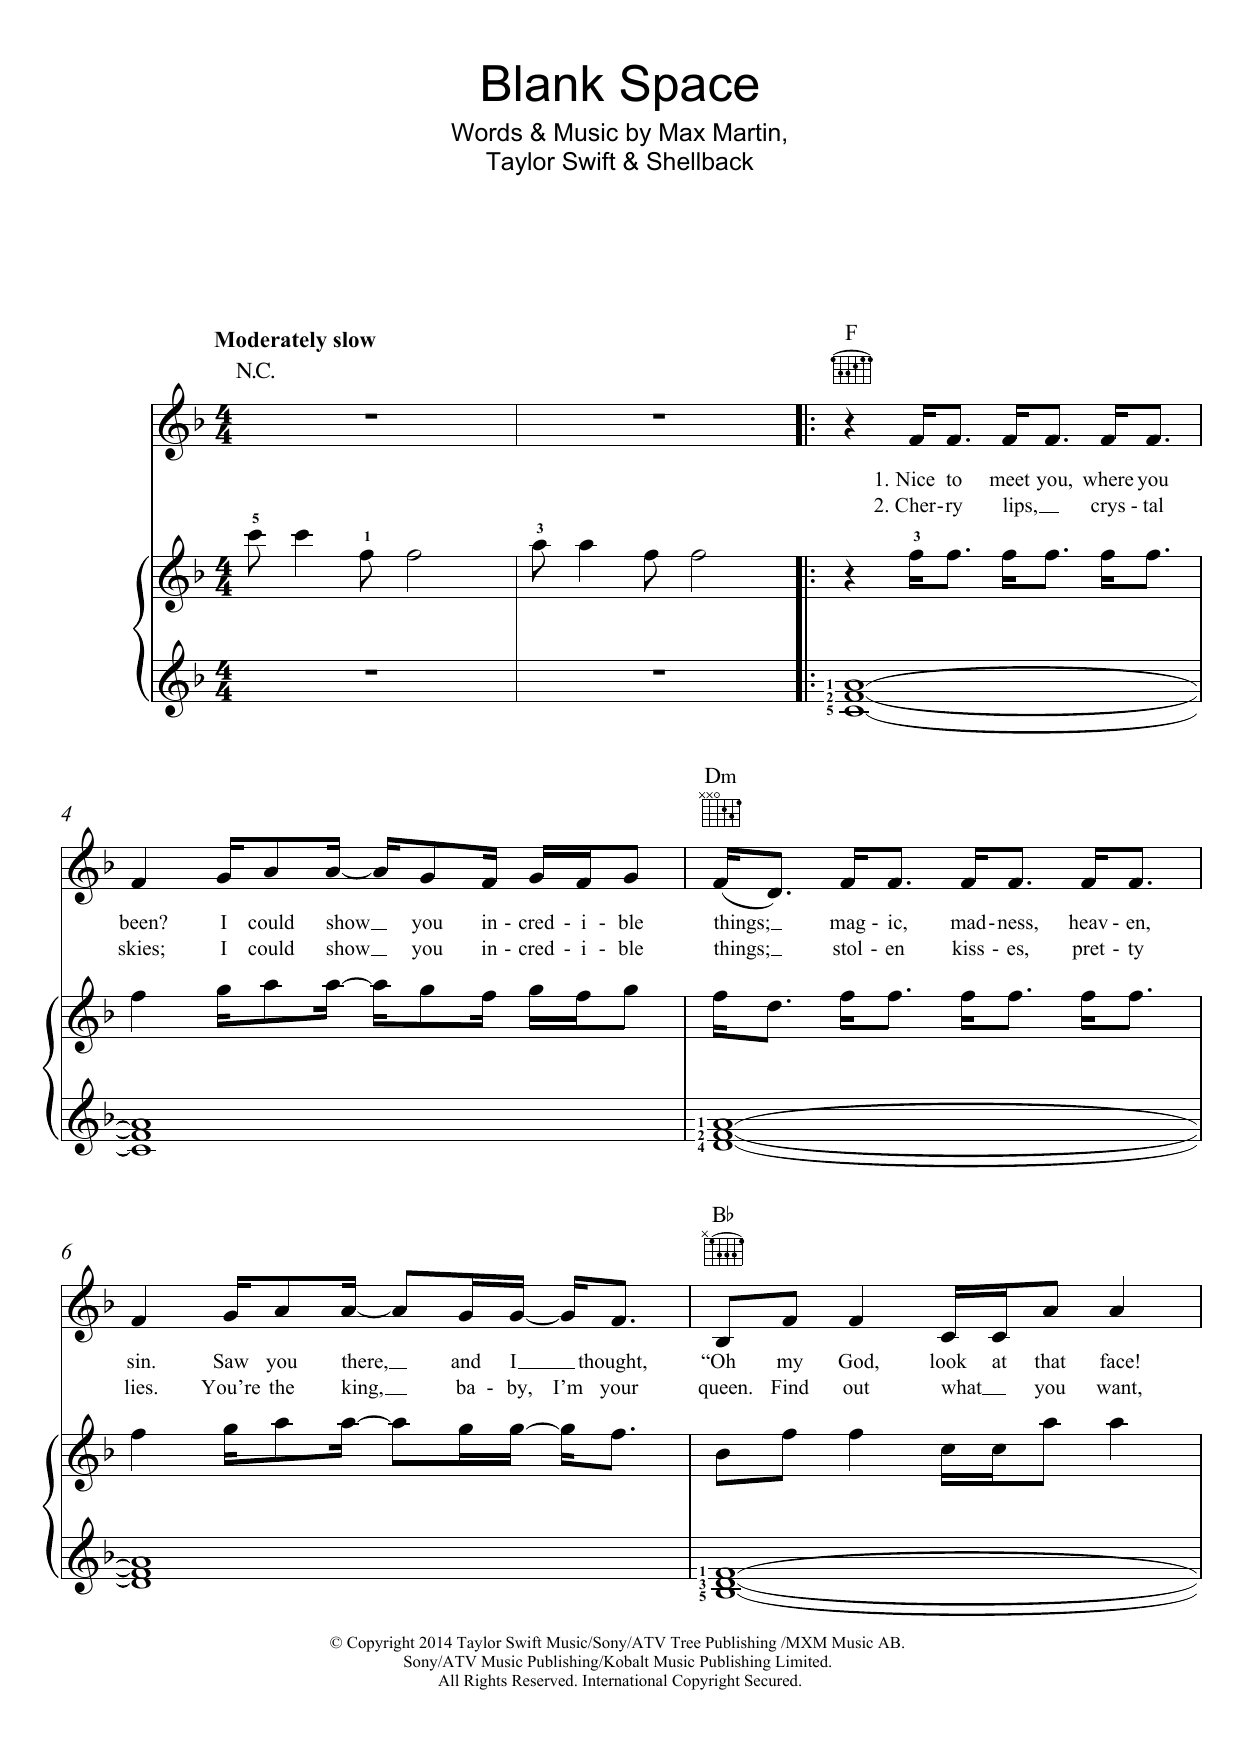 Taylor Swift Blank Space Sheet Music Notes & Chords for Ukulele Lyrics & Chords - Download or Print PDF